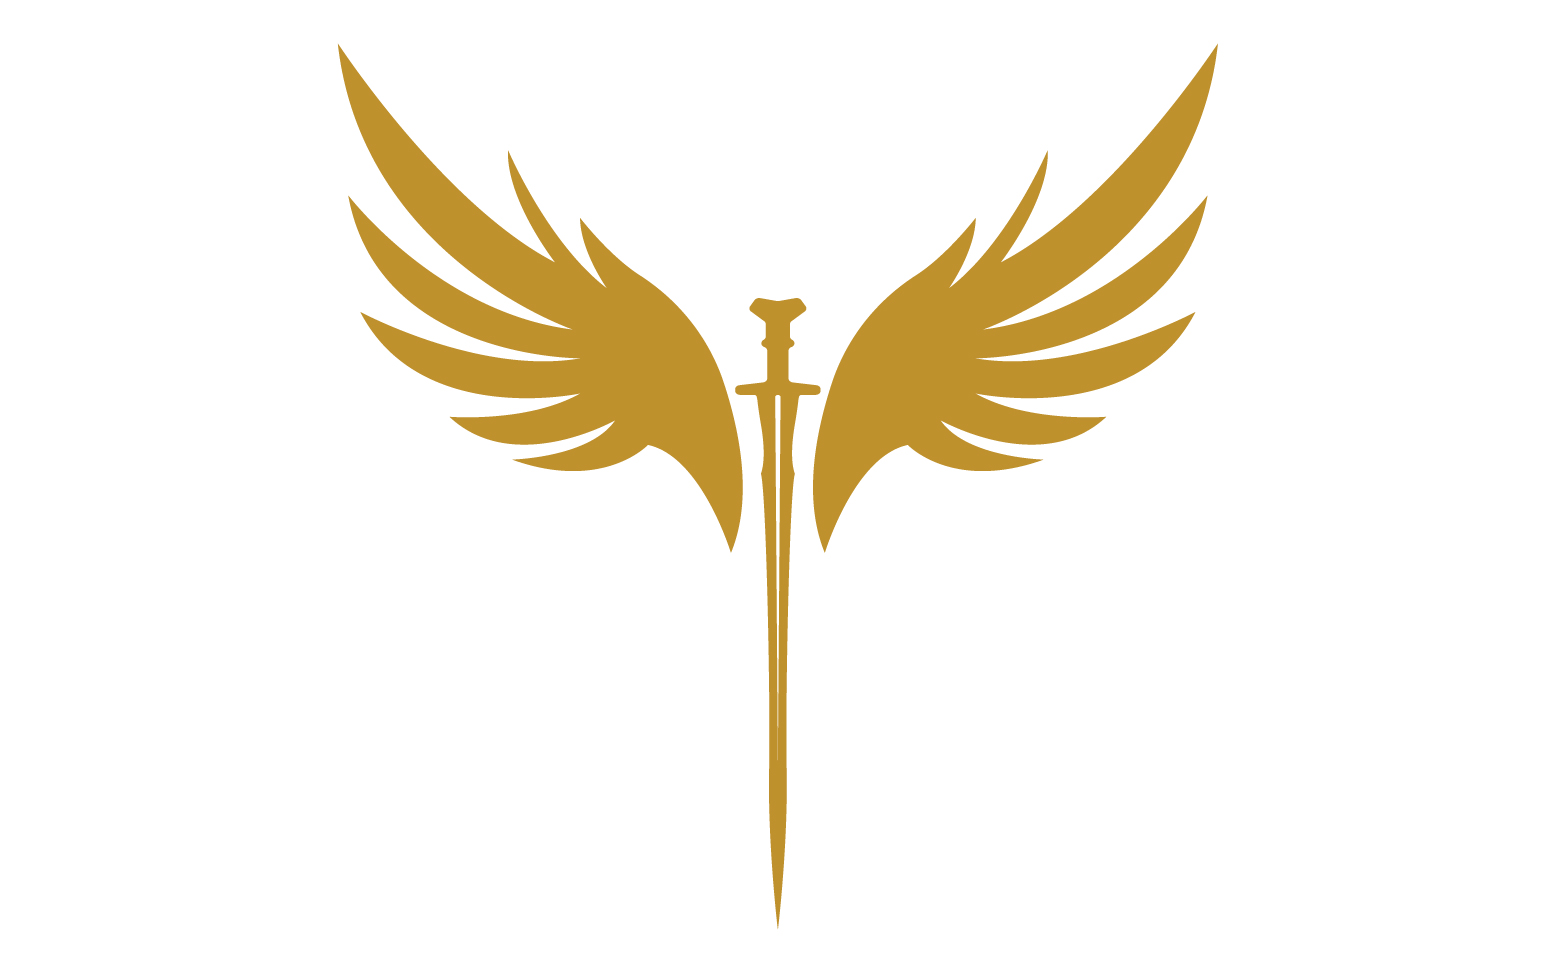 Sword with Wings. Golden Sword Symbol v20